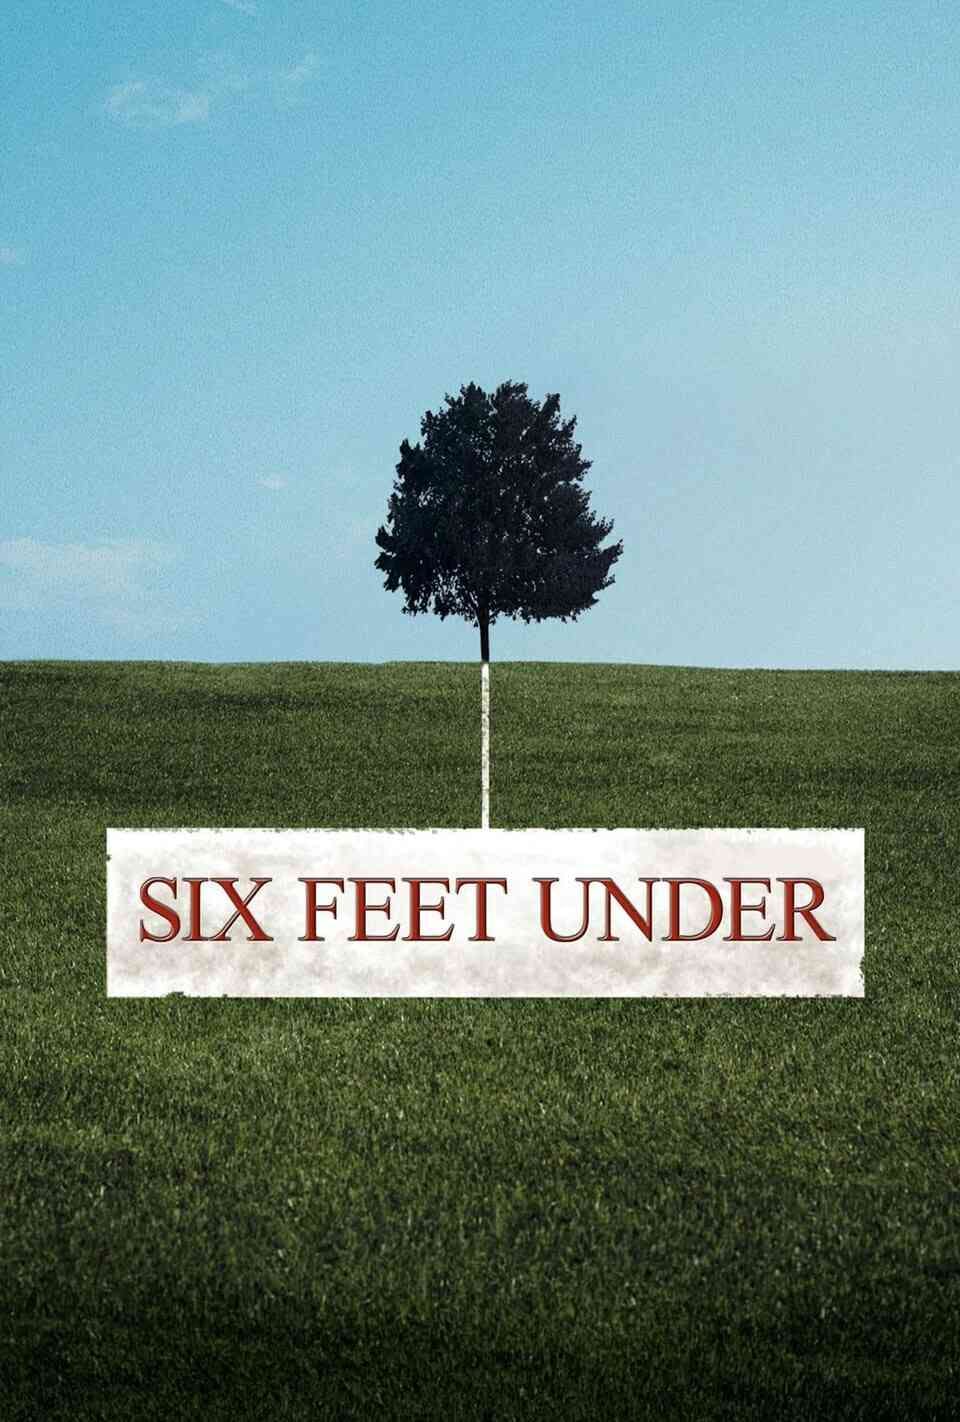 Read Six Feet Under screenplay.